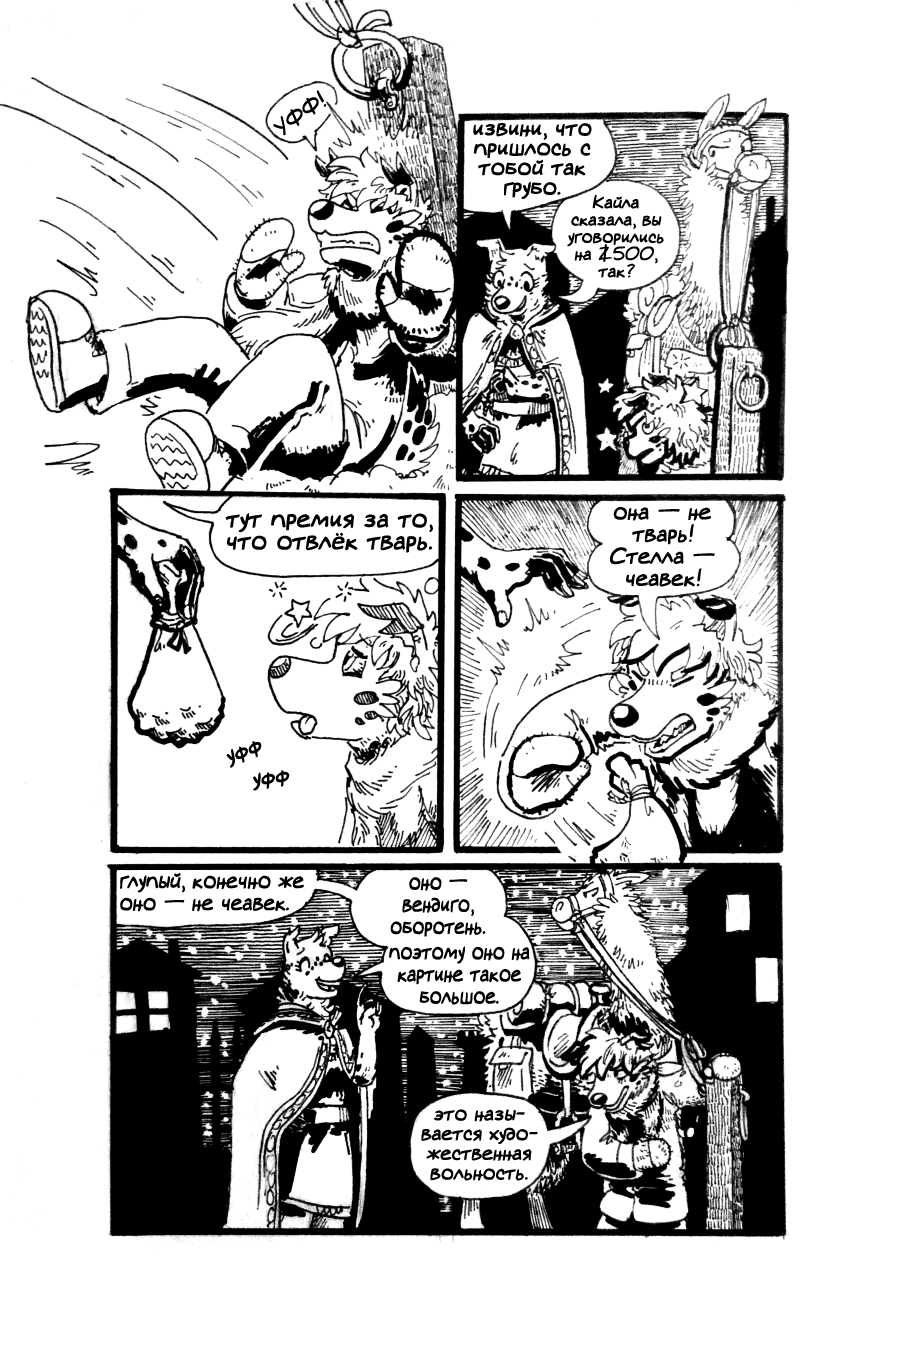 Комикс Беспризорное Царство [Latchkey Kingdom]: выпуск №424